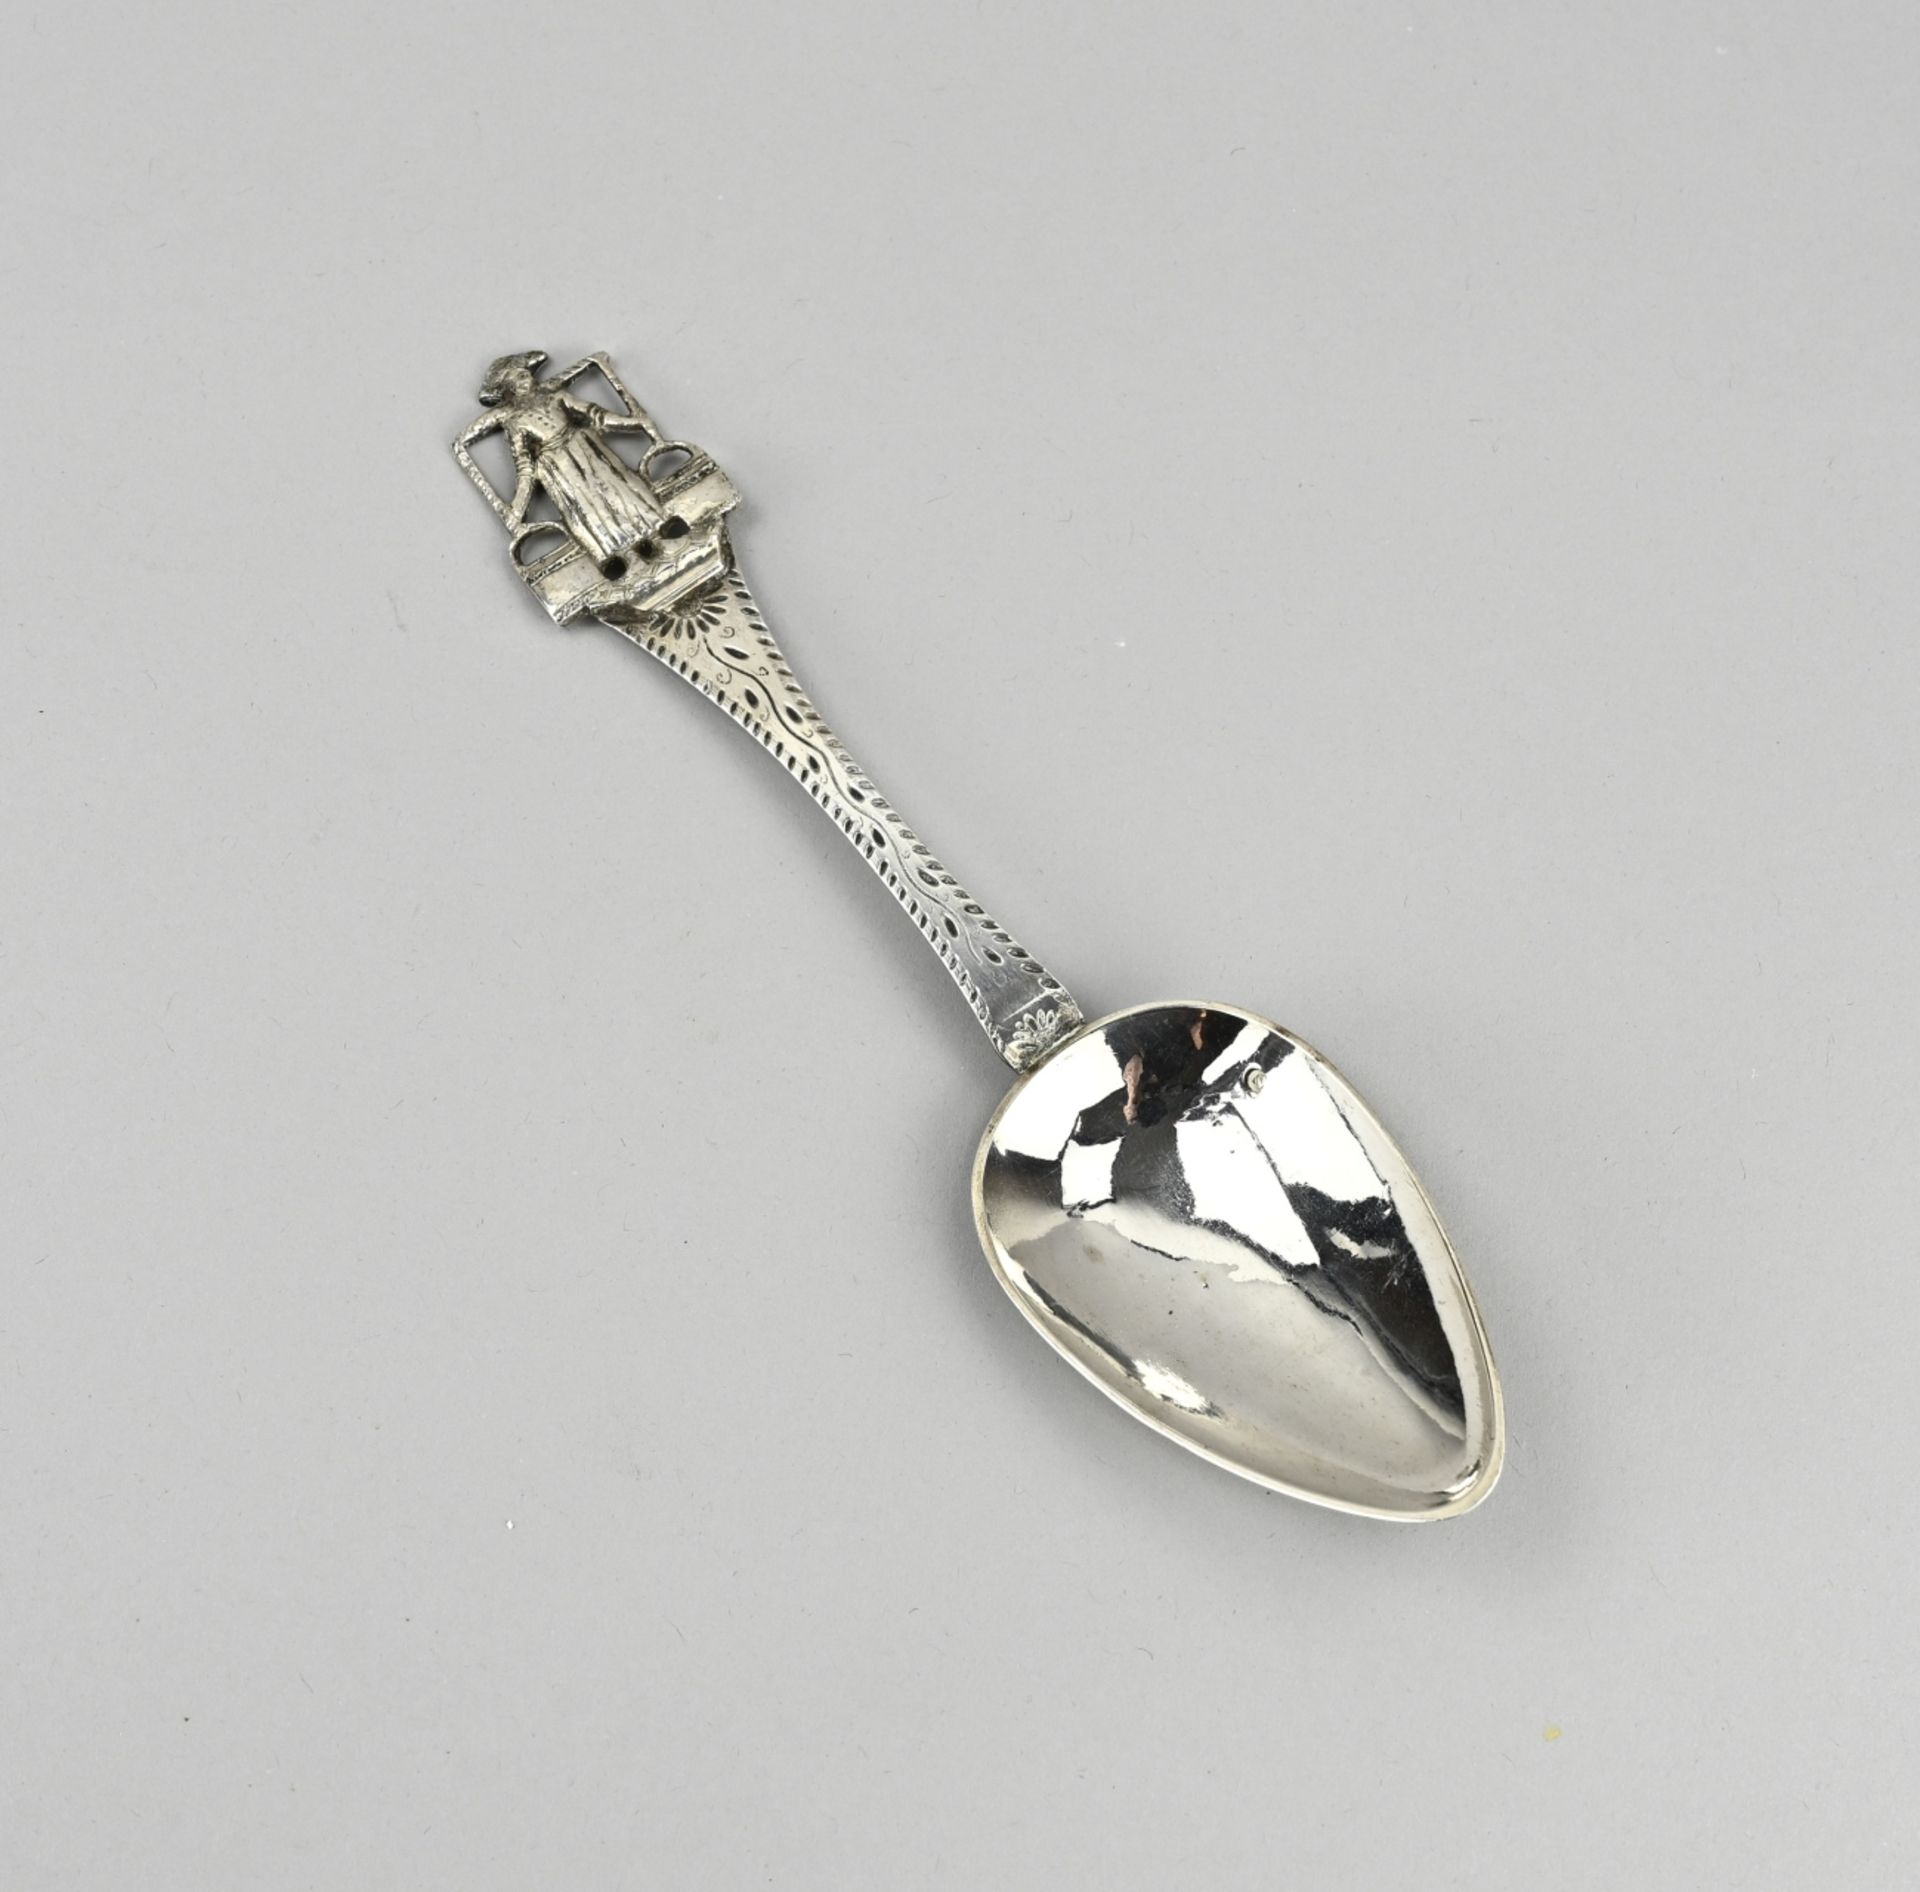 Silver birth spoon